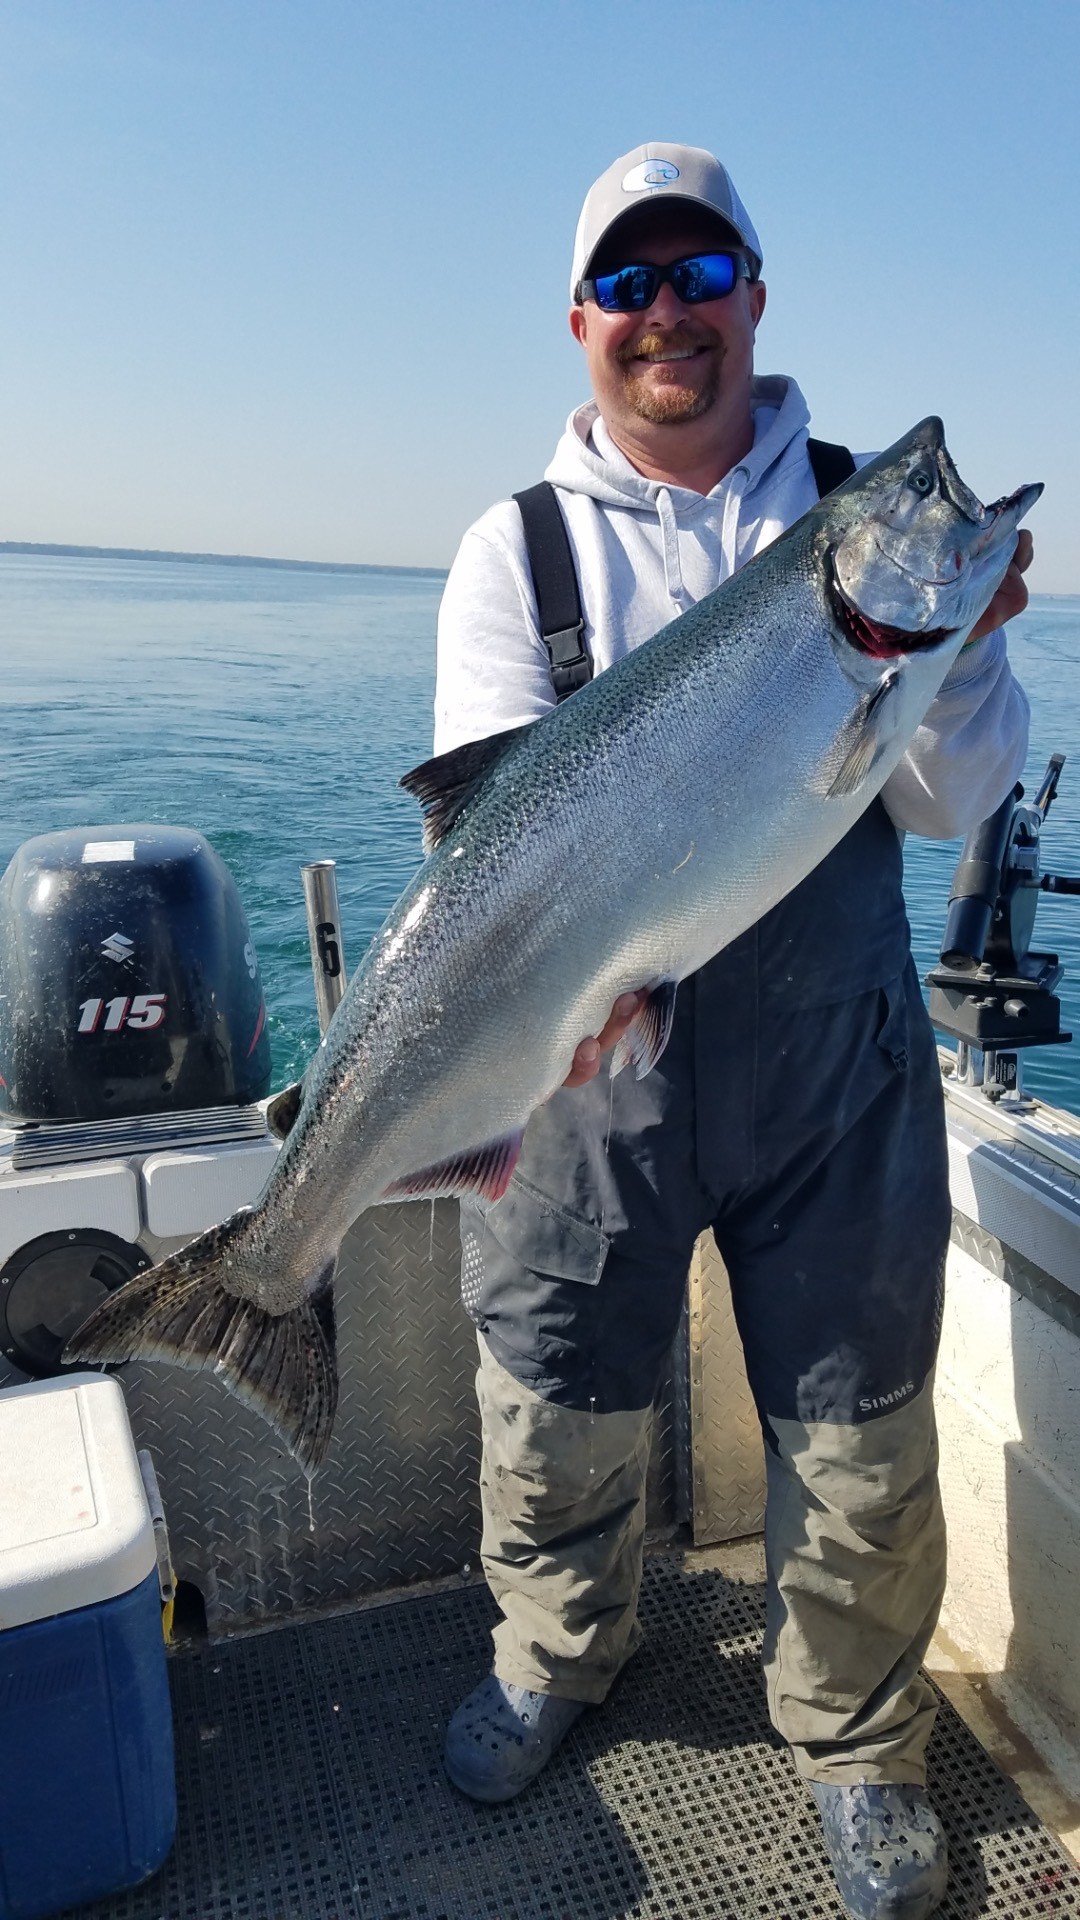 Penrod & Reel - Northern Indiana Lakes & Lake Michigan Fish Charters